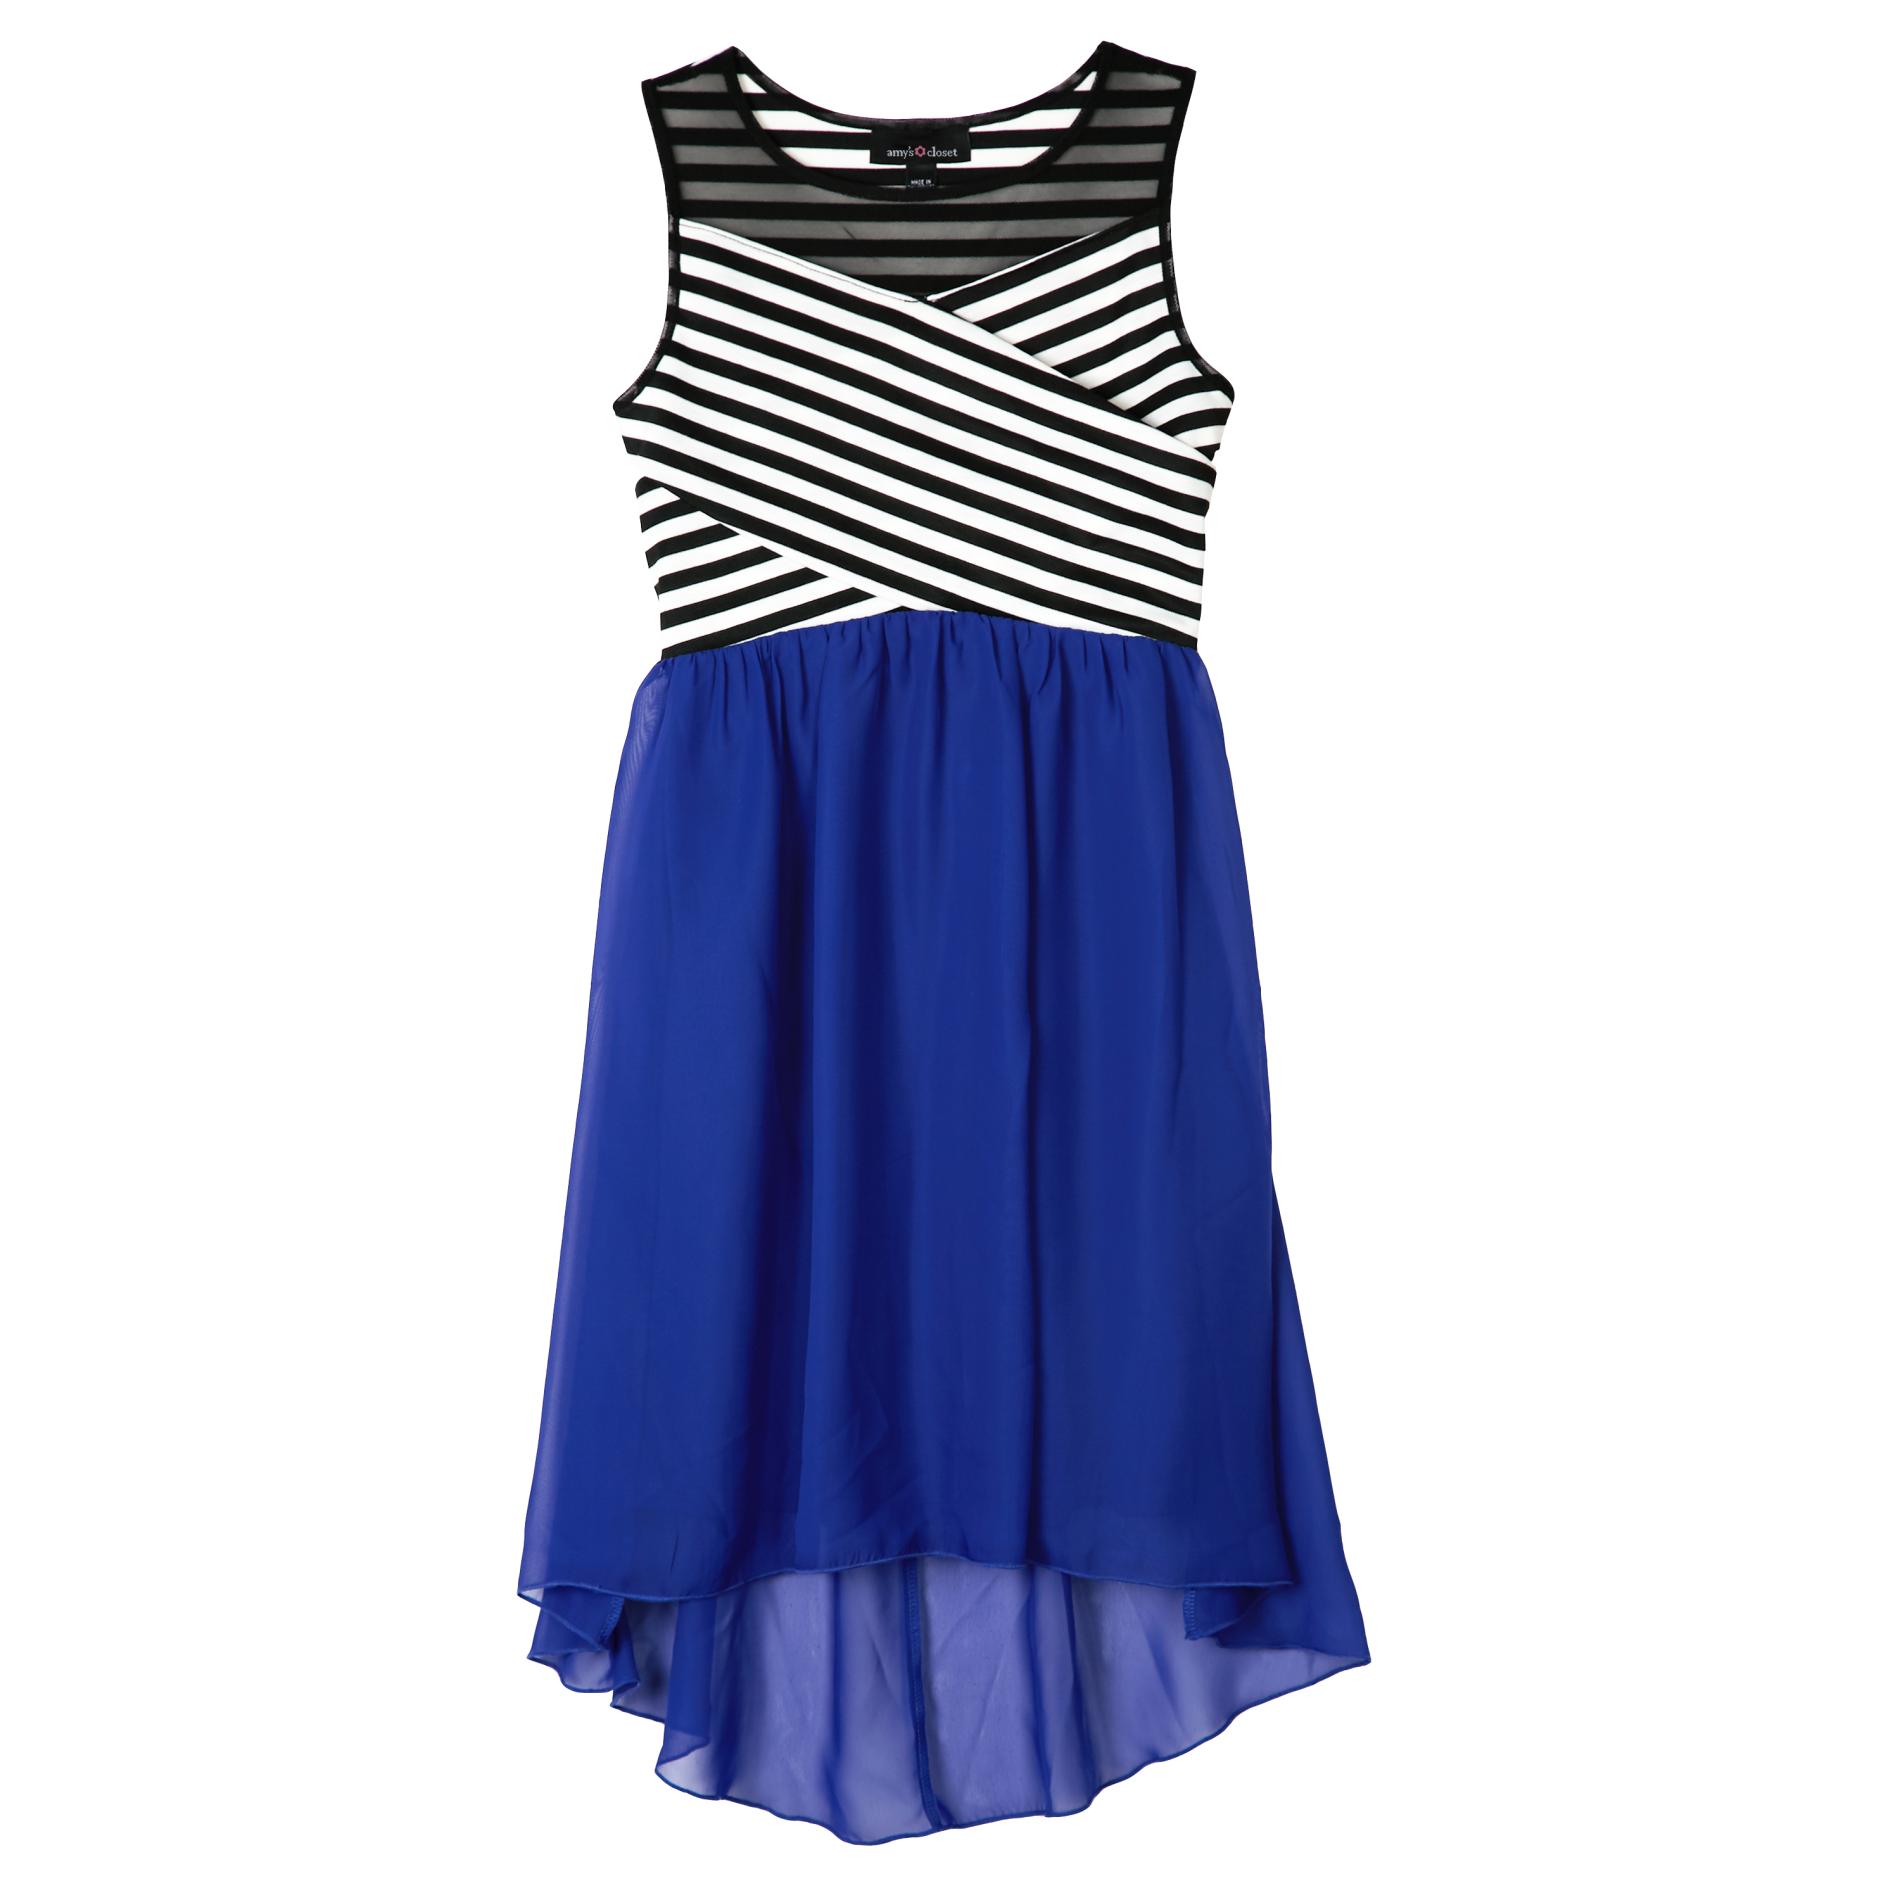 Amy's Closet Girl's Sleeveless High-Low Dress - Striped